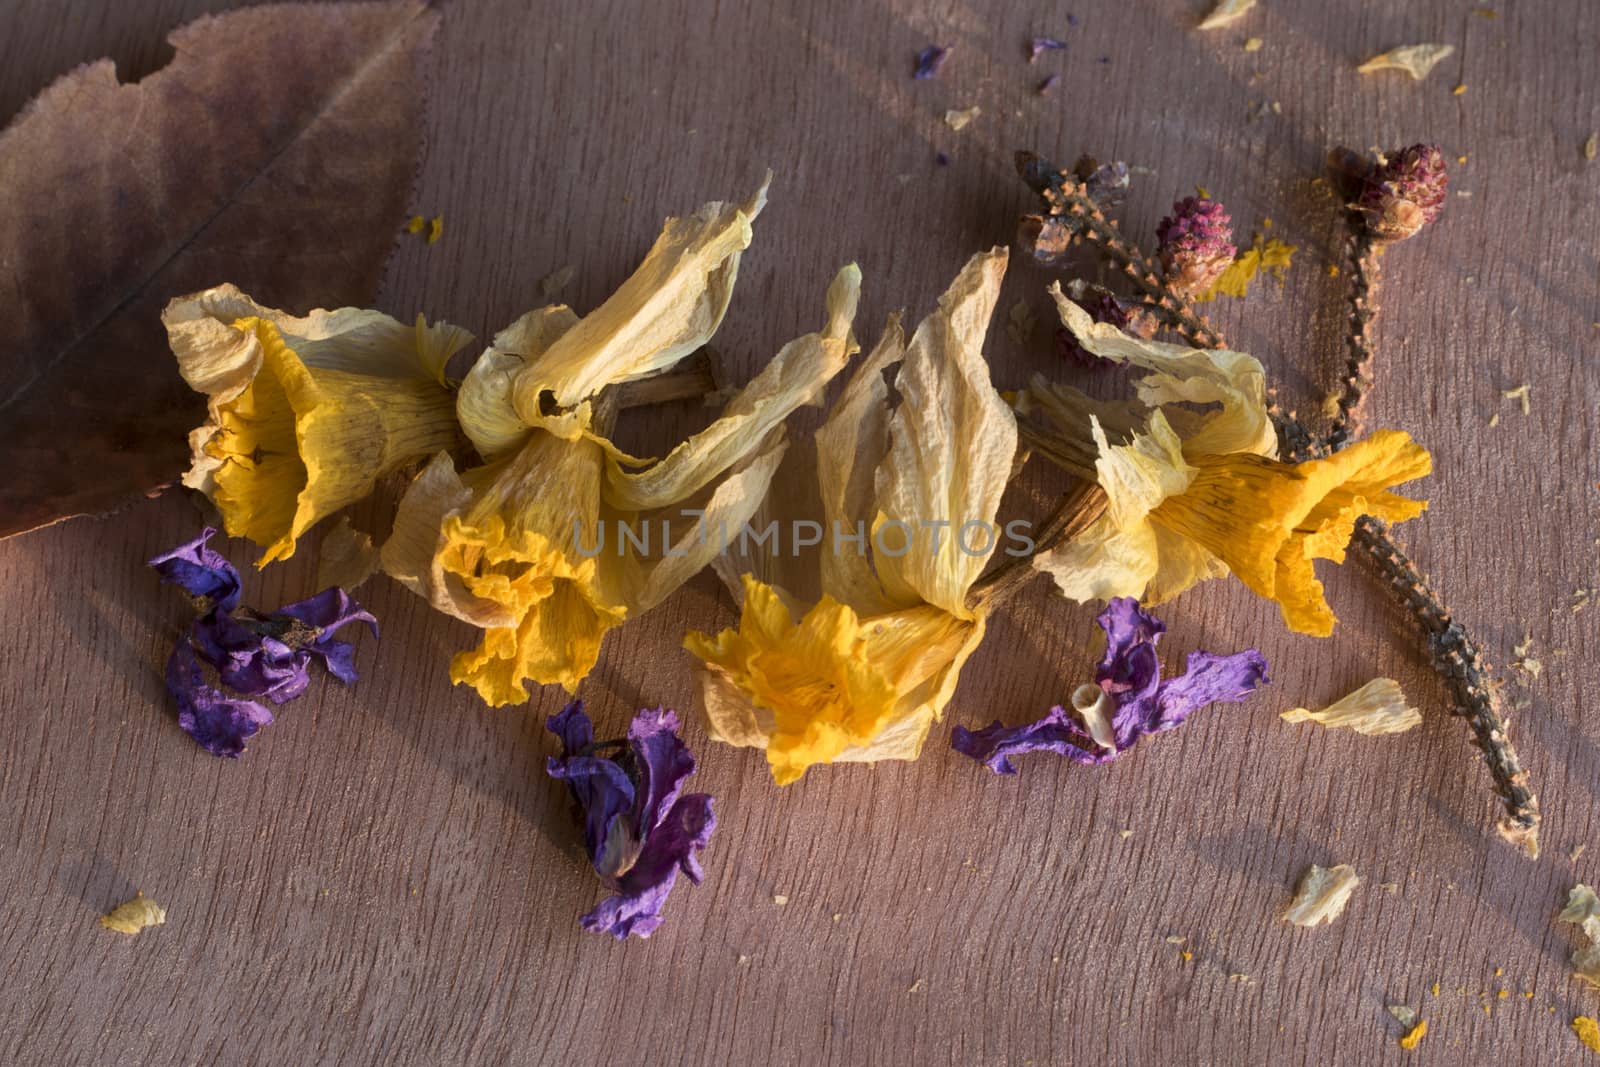 Dry flowers and plants, herbal tea by Taidundua